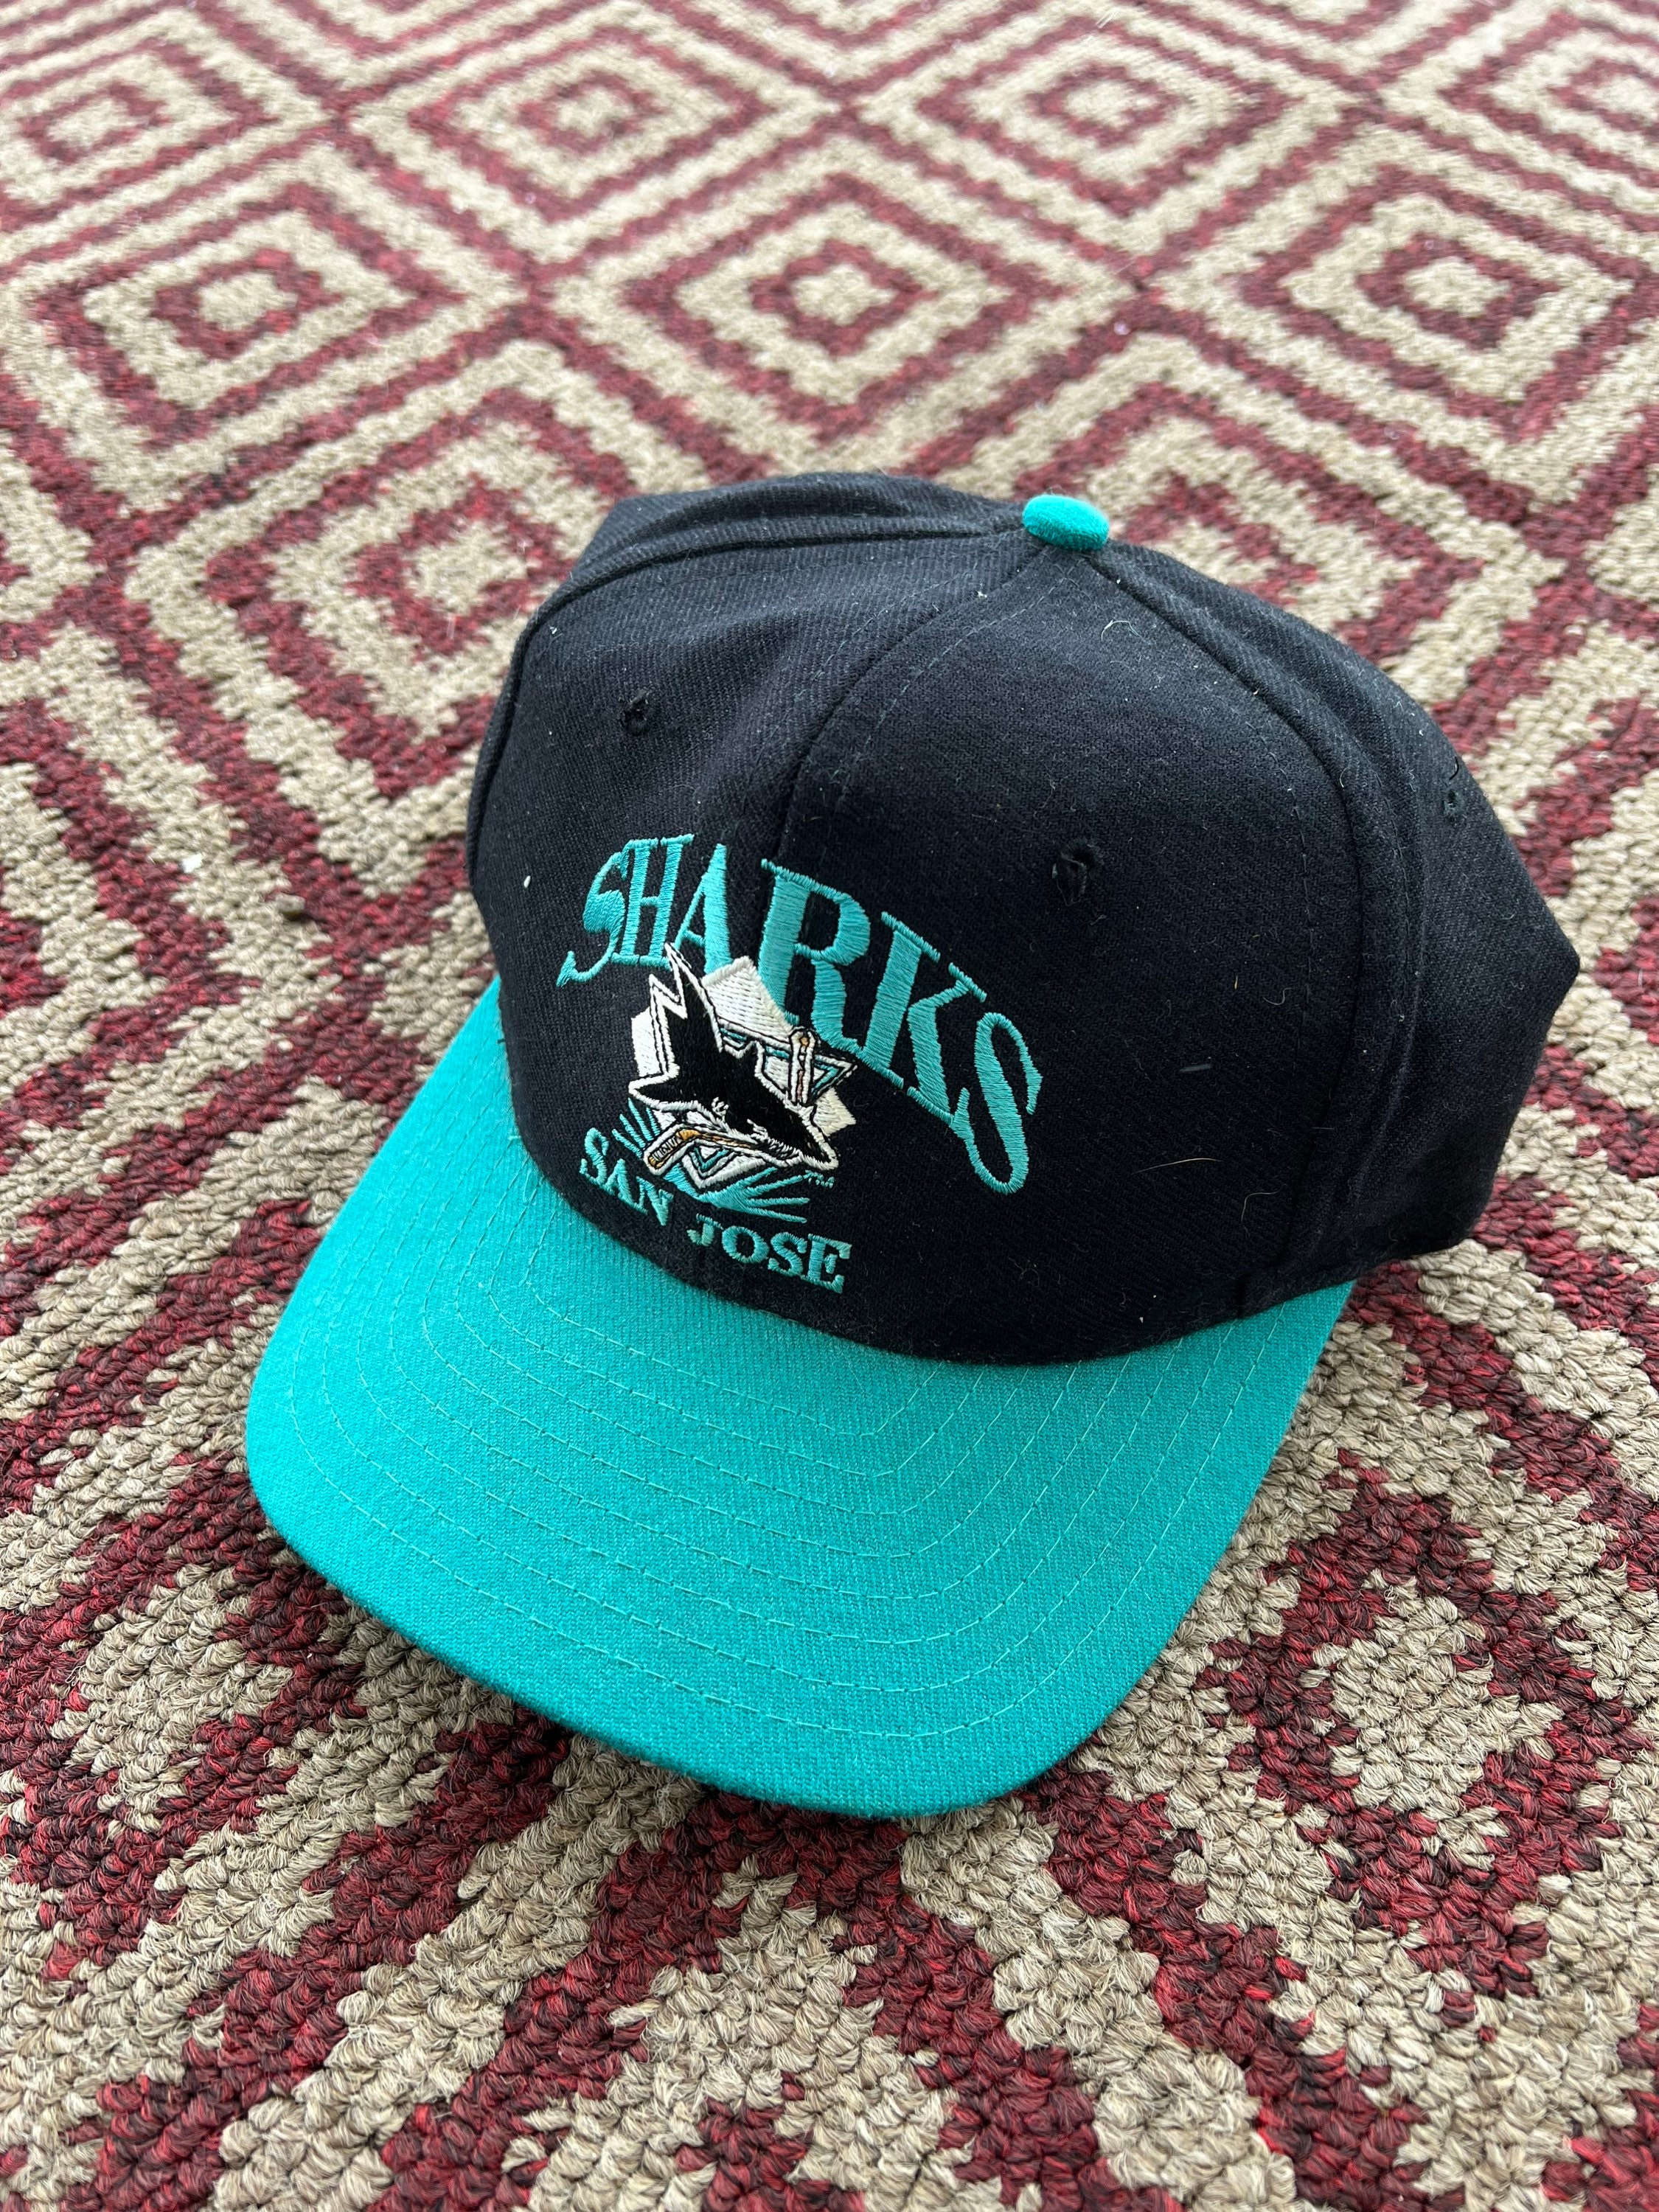 Vintage San Jose Sharks Snapback Hat – Continuous Vintage